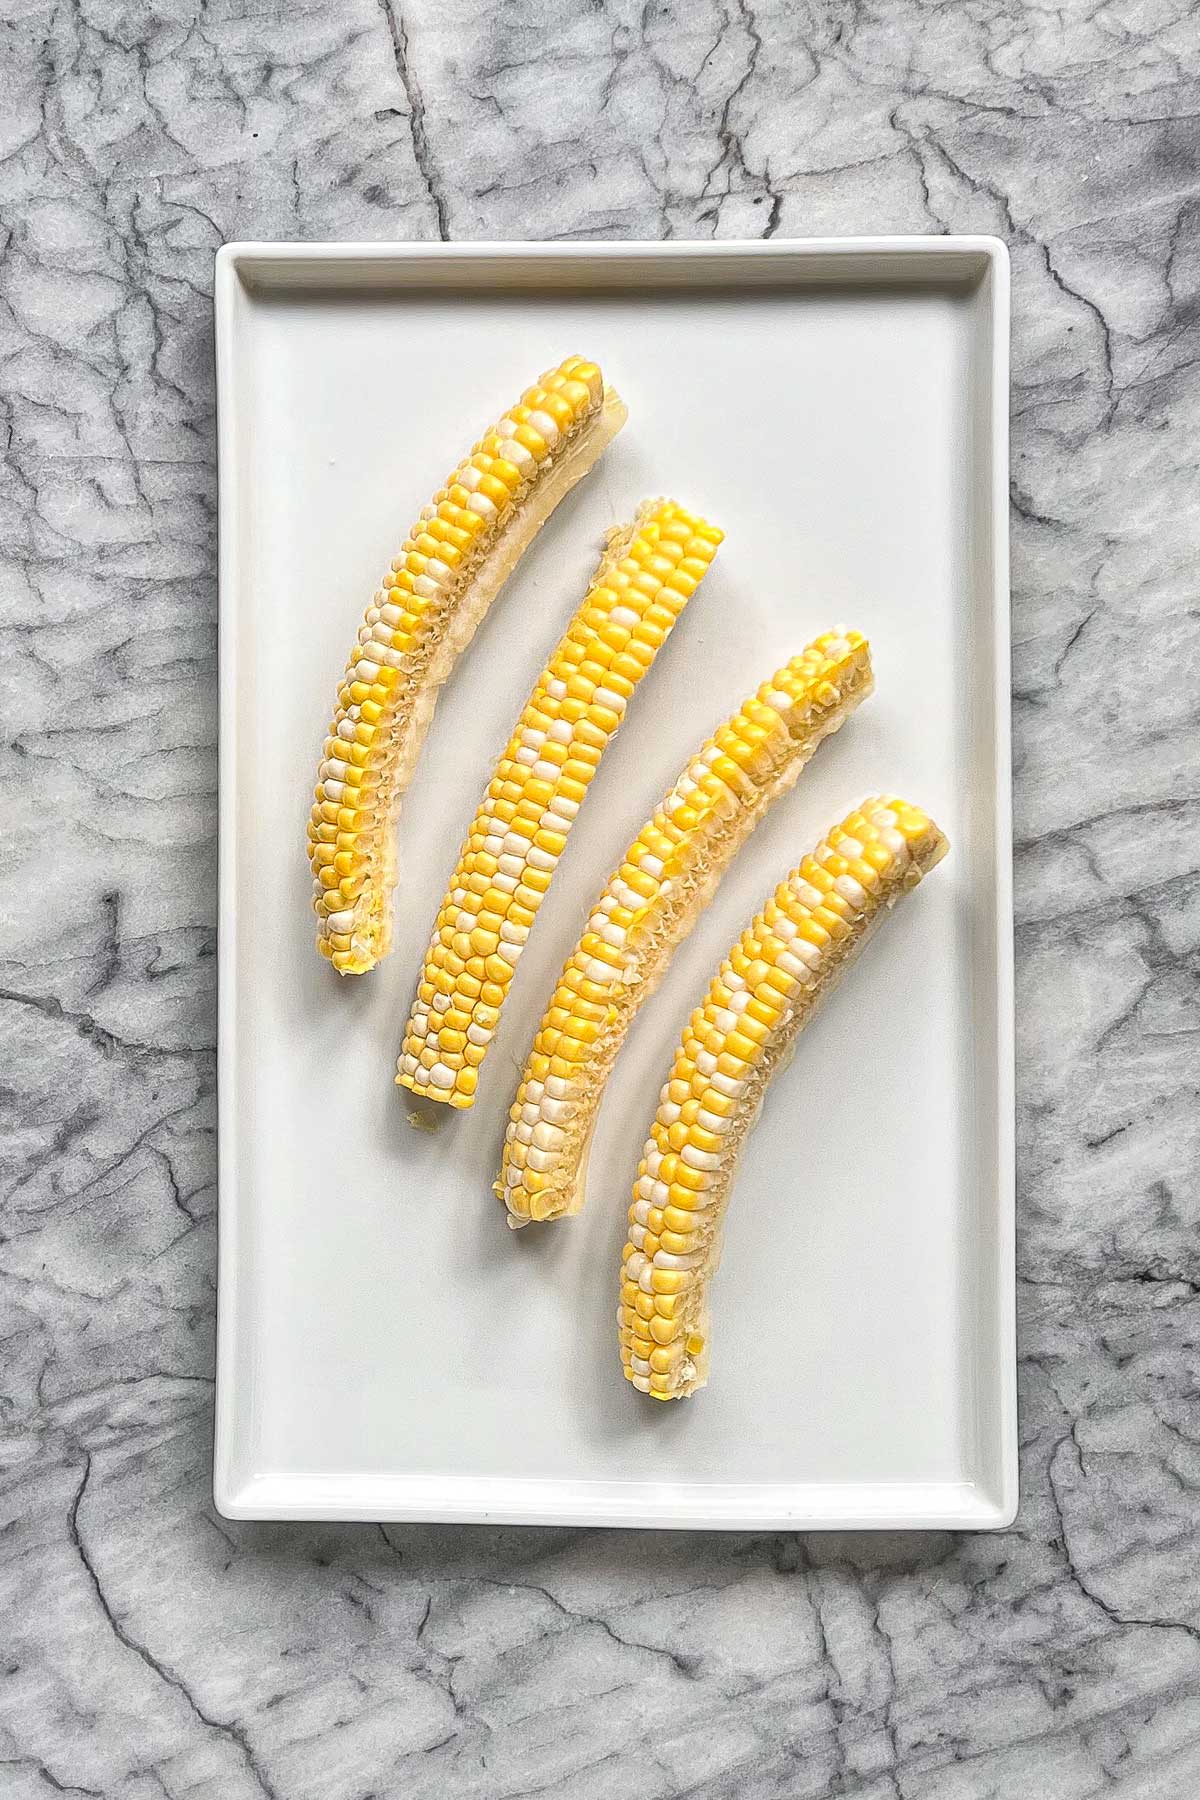 An ear of corn cut into 4 corn ribs